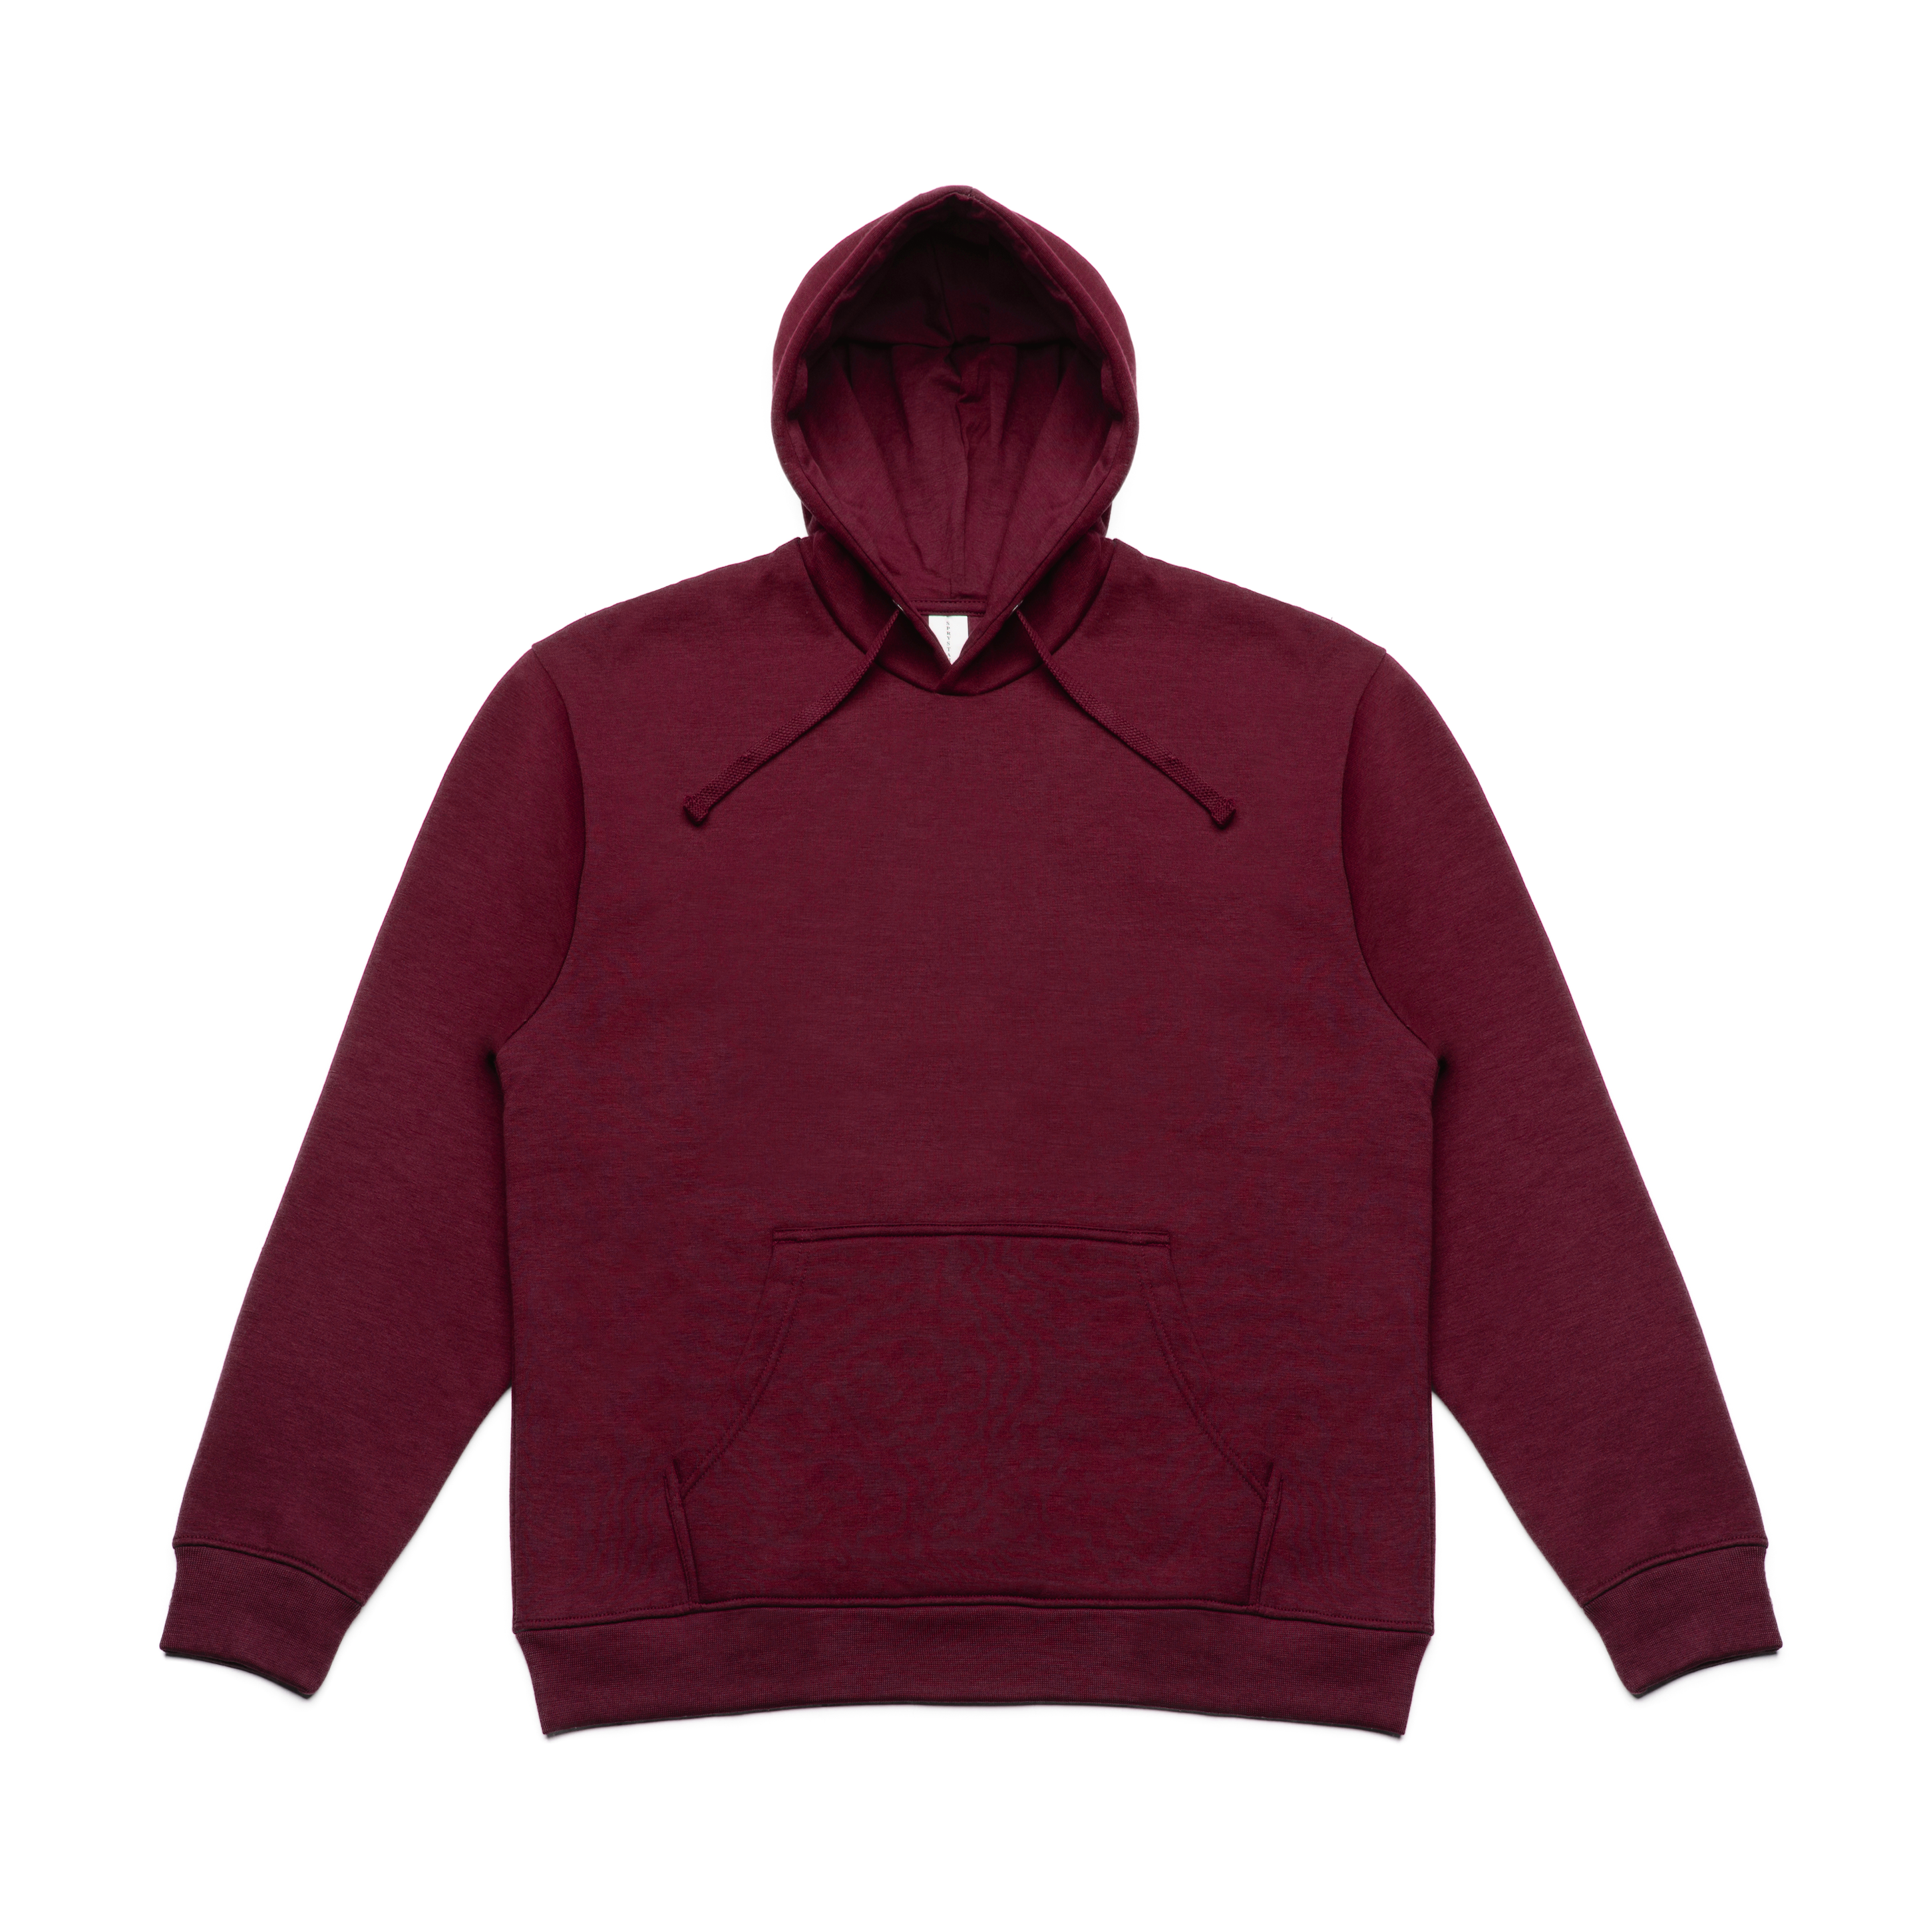 SS1024 Premium Pullover Hoodies - Burgundy [Wholesale]